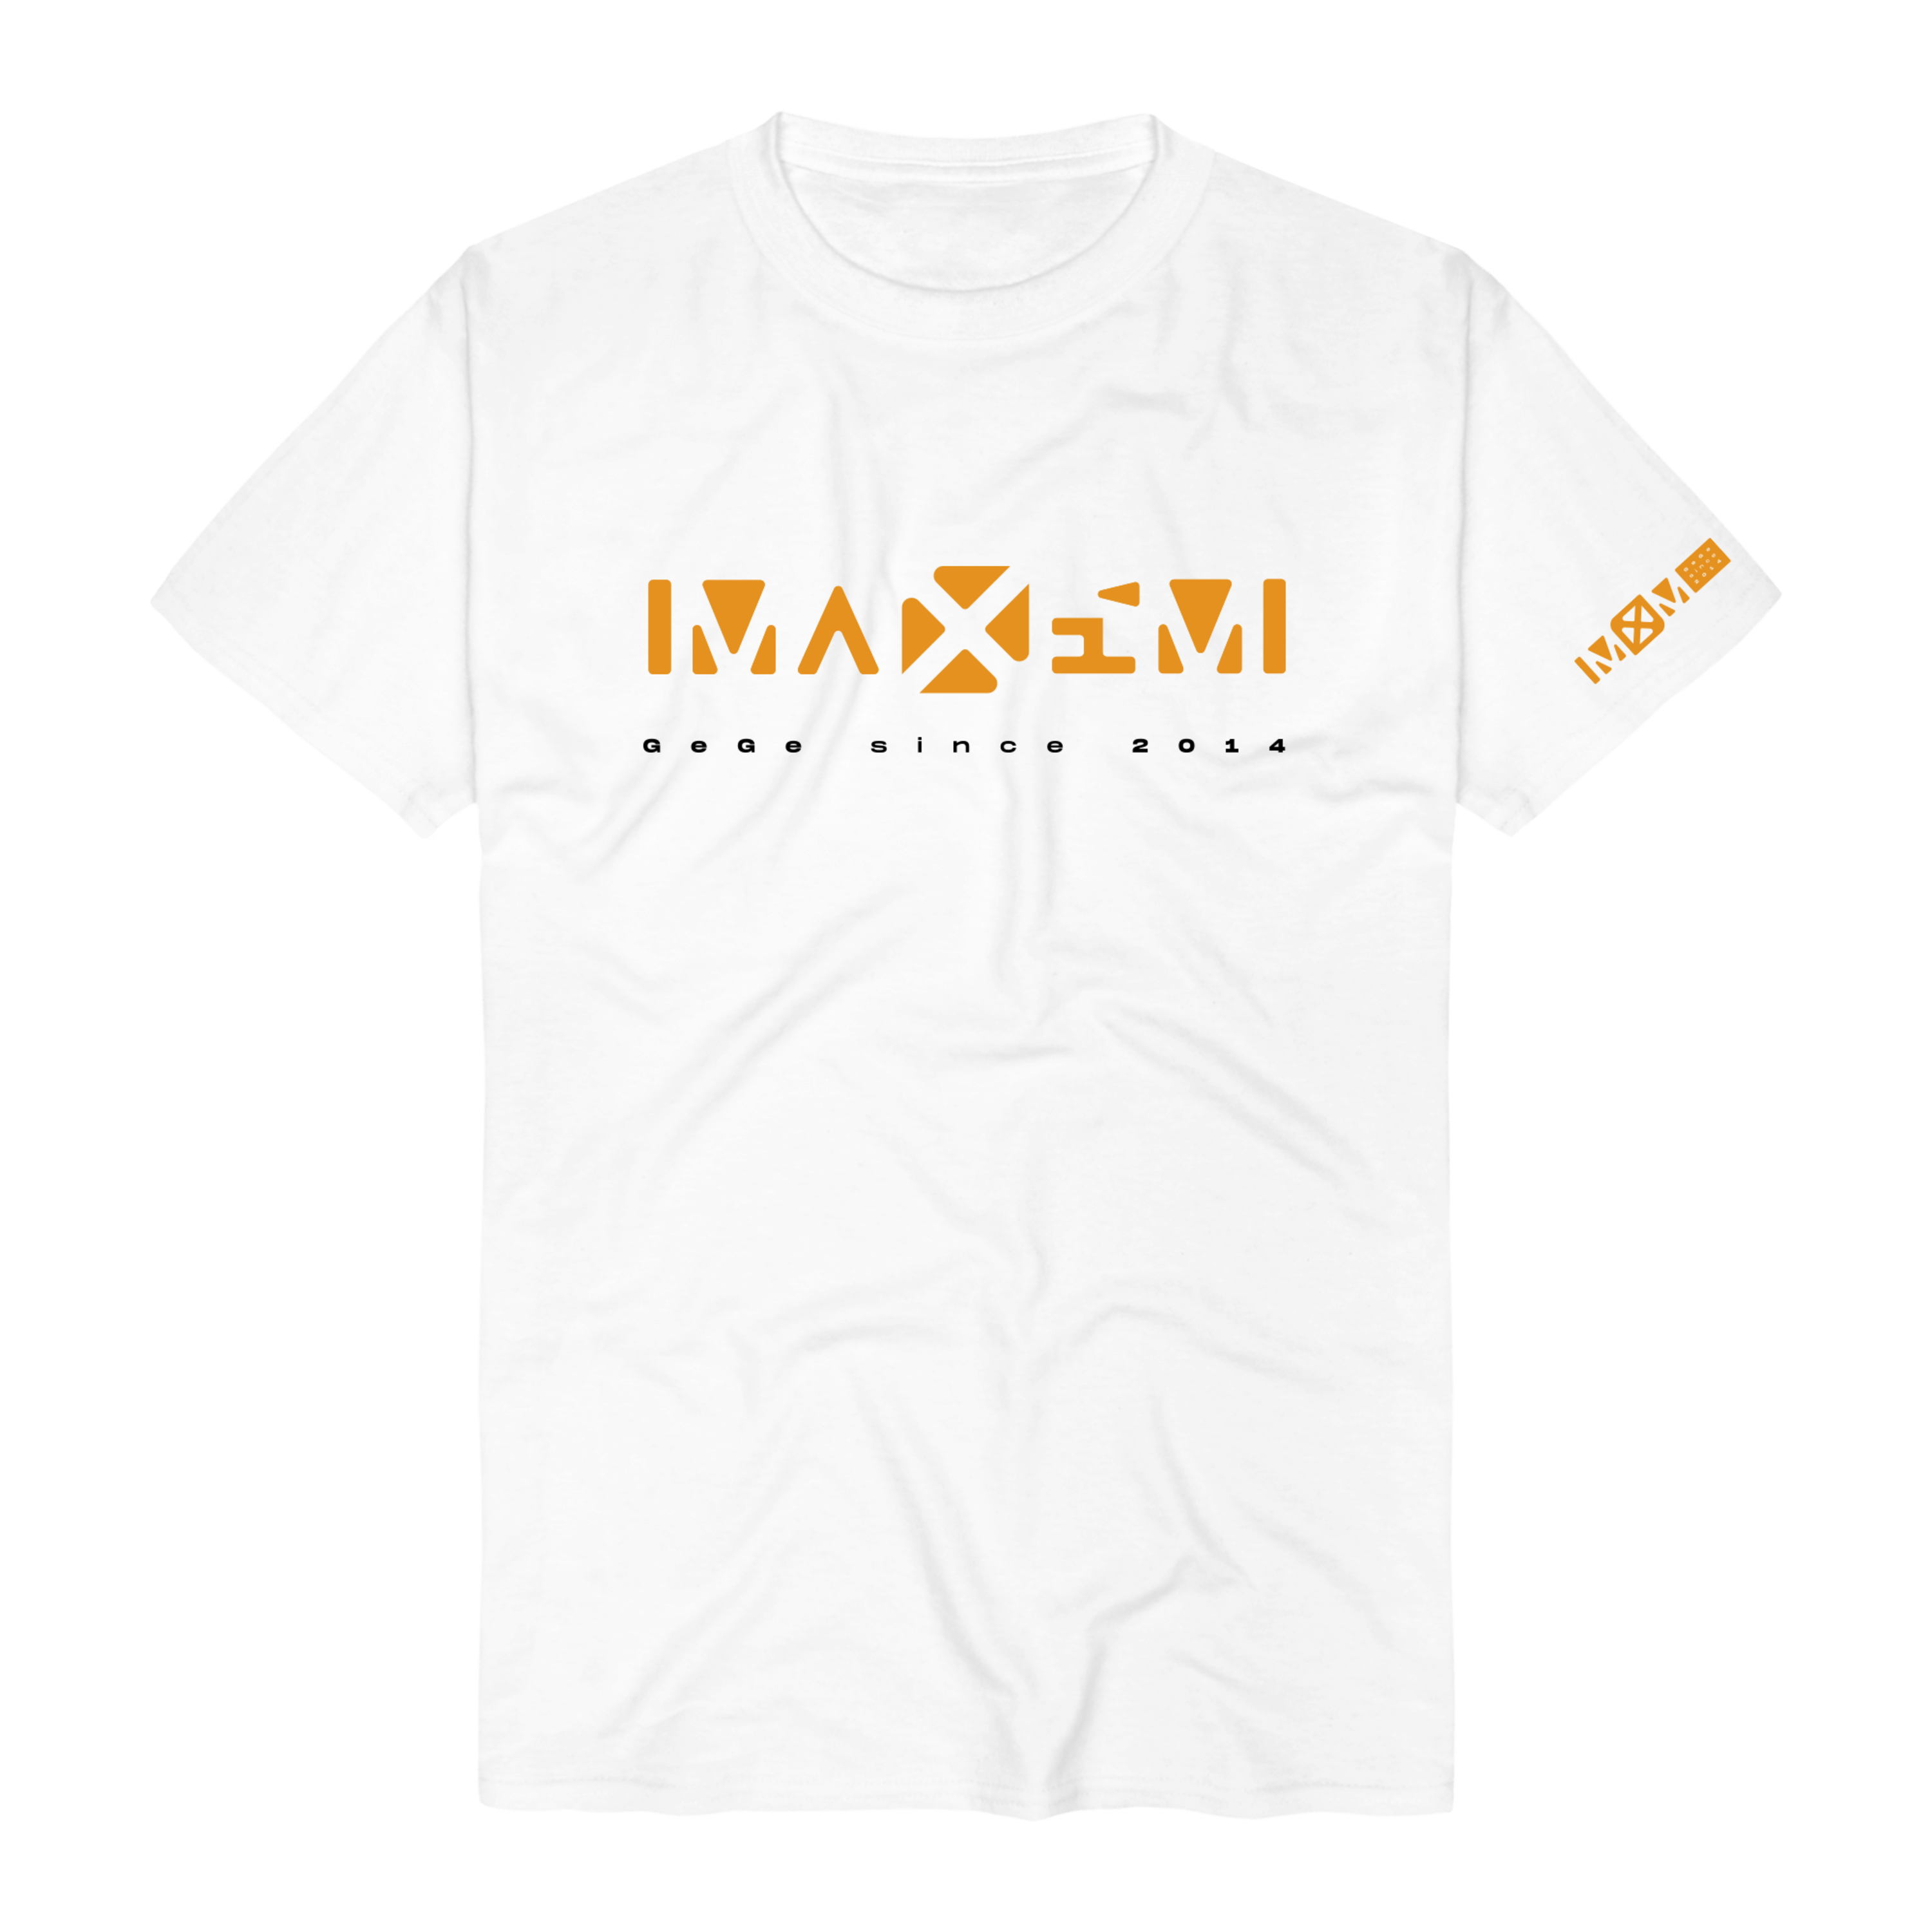 https://images.bravado.de/prod/product-assets/product-asset-data/maxim/maxim-1/products/139295/web/304200/image-thumb__304200__3000x3000_original/Maxim-Logo-T-Shirt-weiss-139295-304200.png